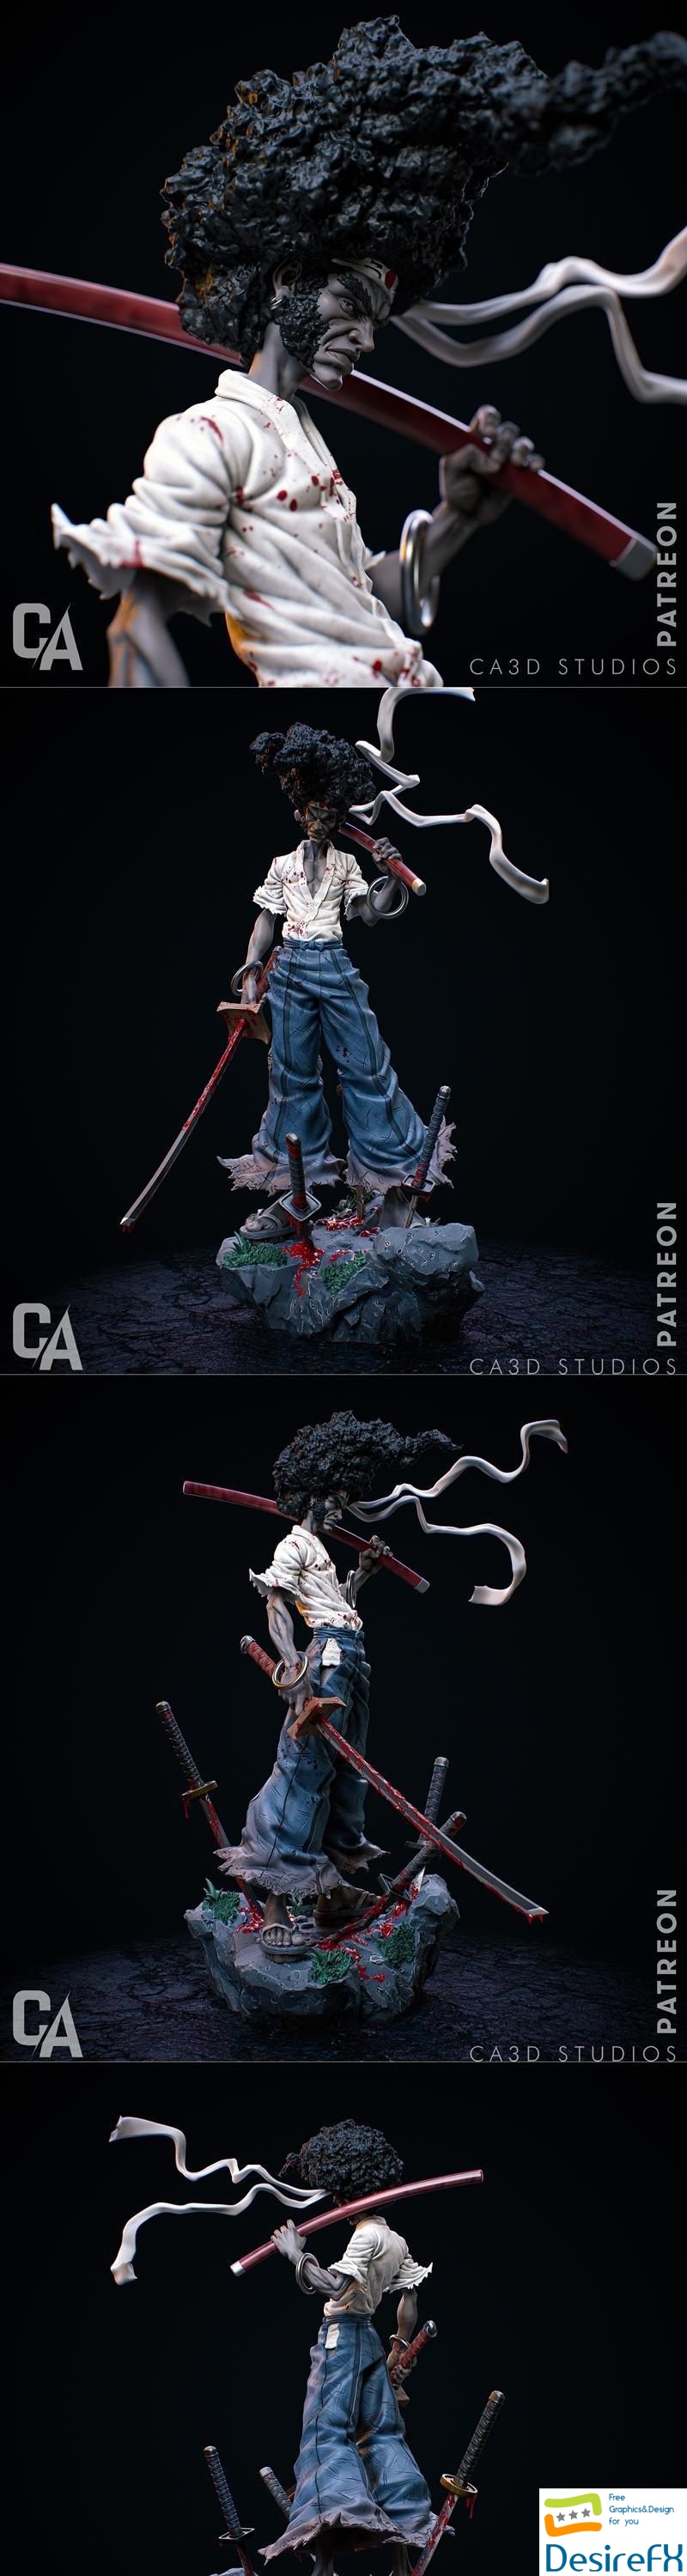 Ca 3d Studios - Afro Samurai 3D Print